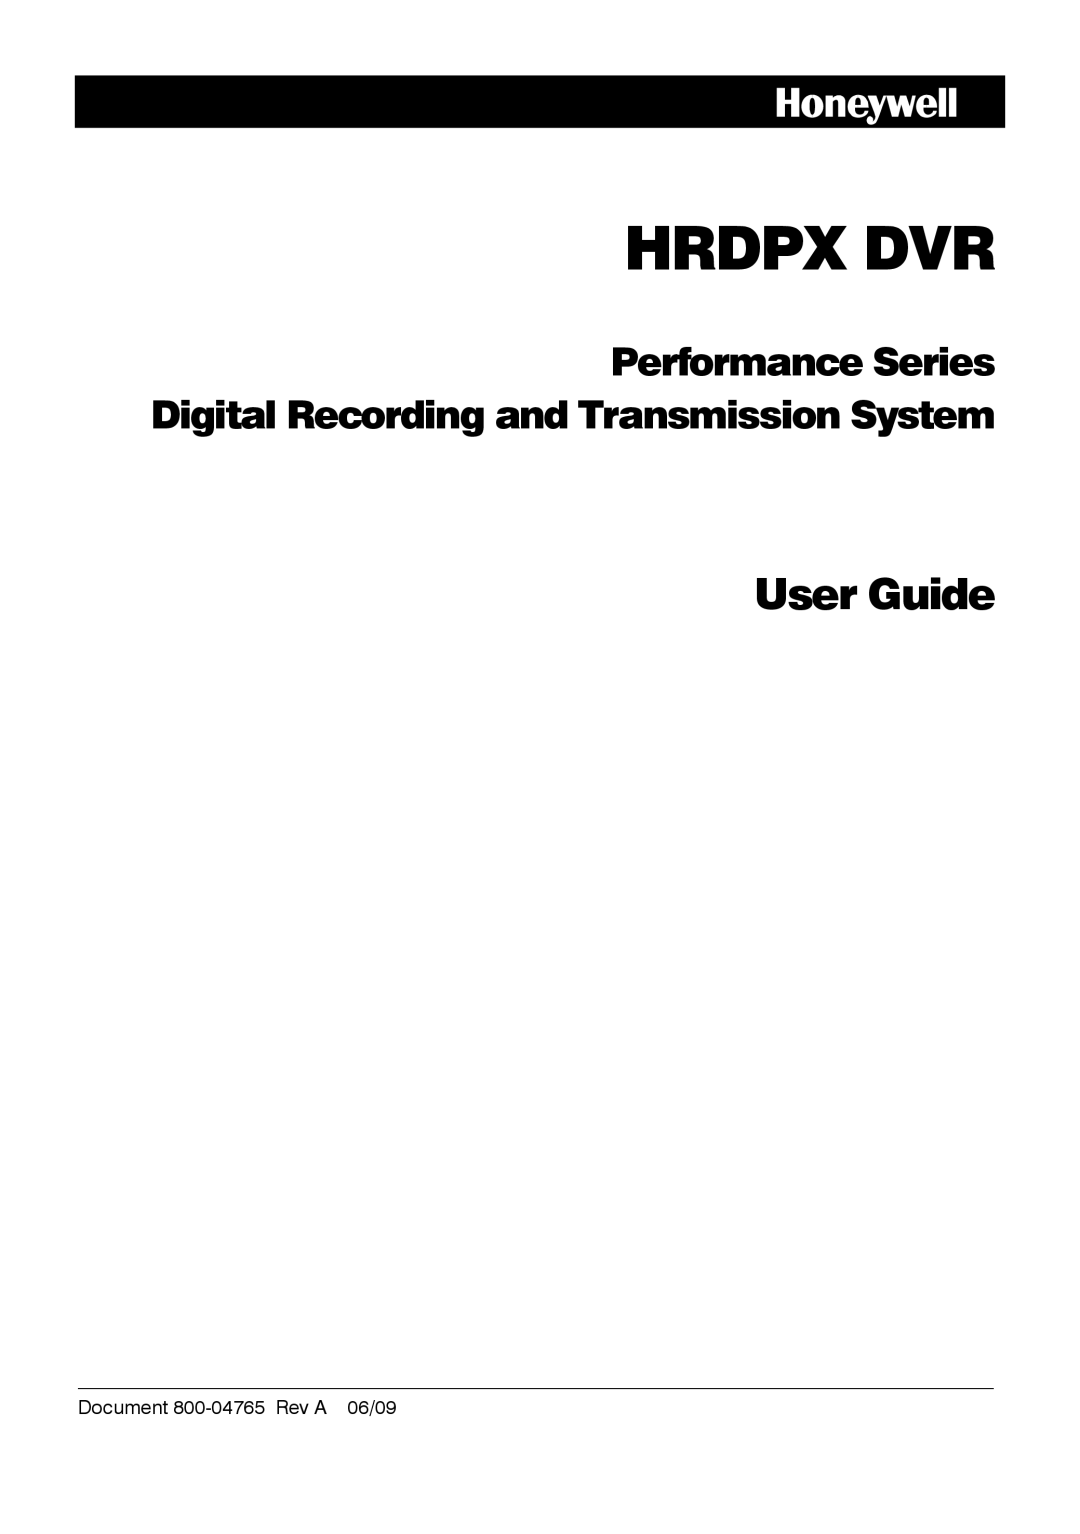 Honeywell HRDPX manual Hrdpx DVR 